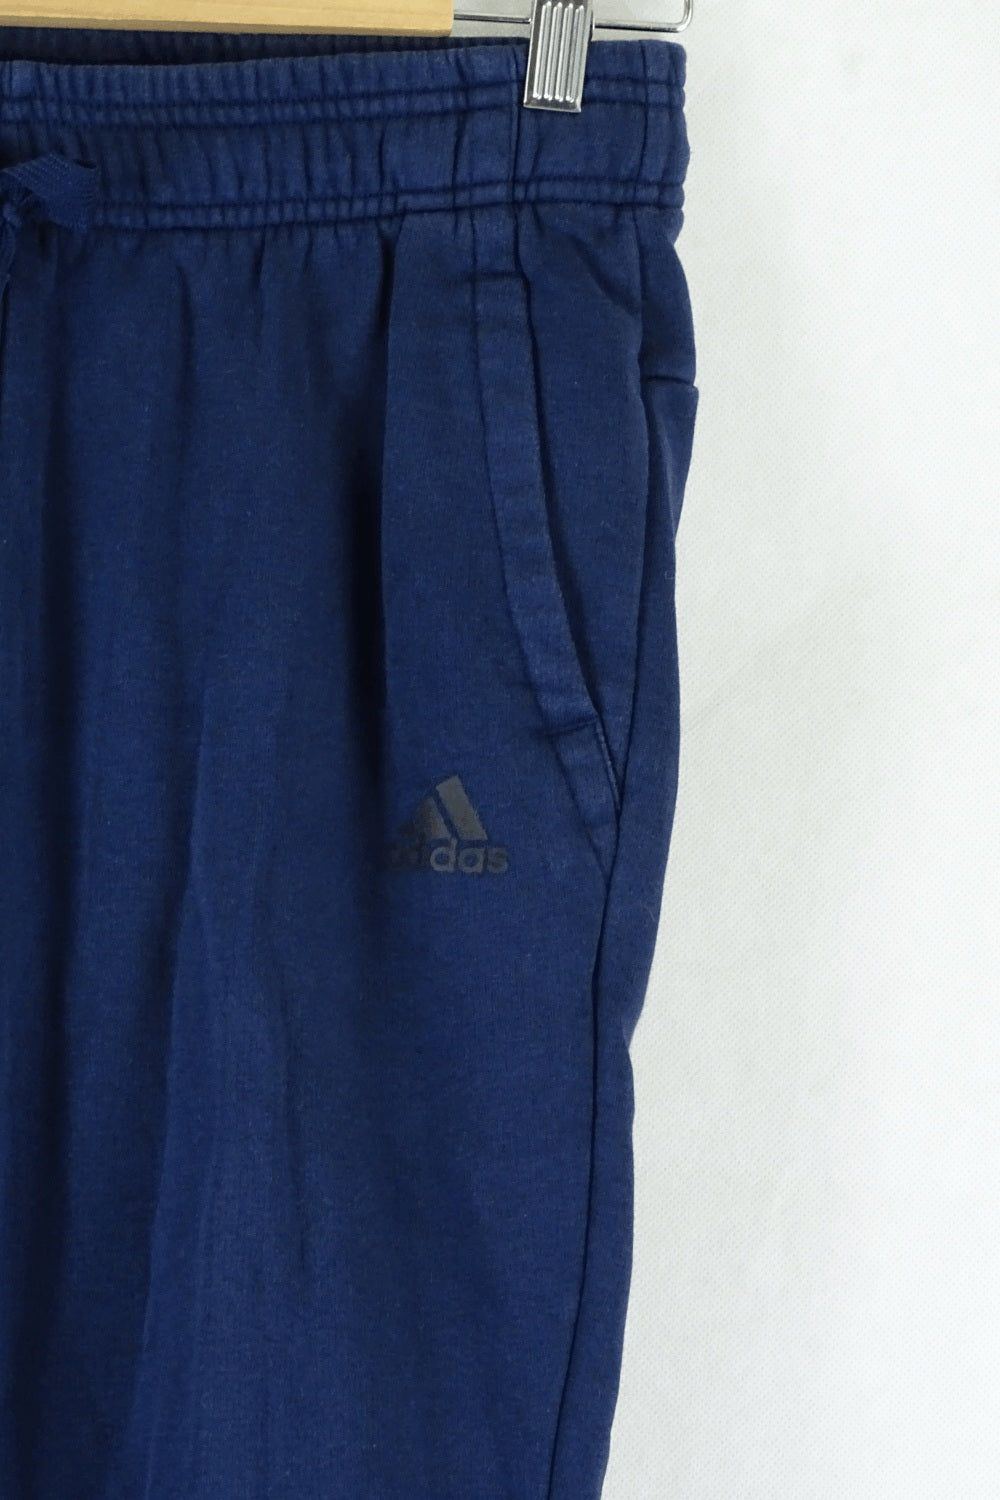 Adidas Blue Pants S